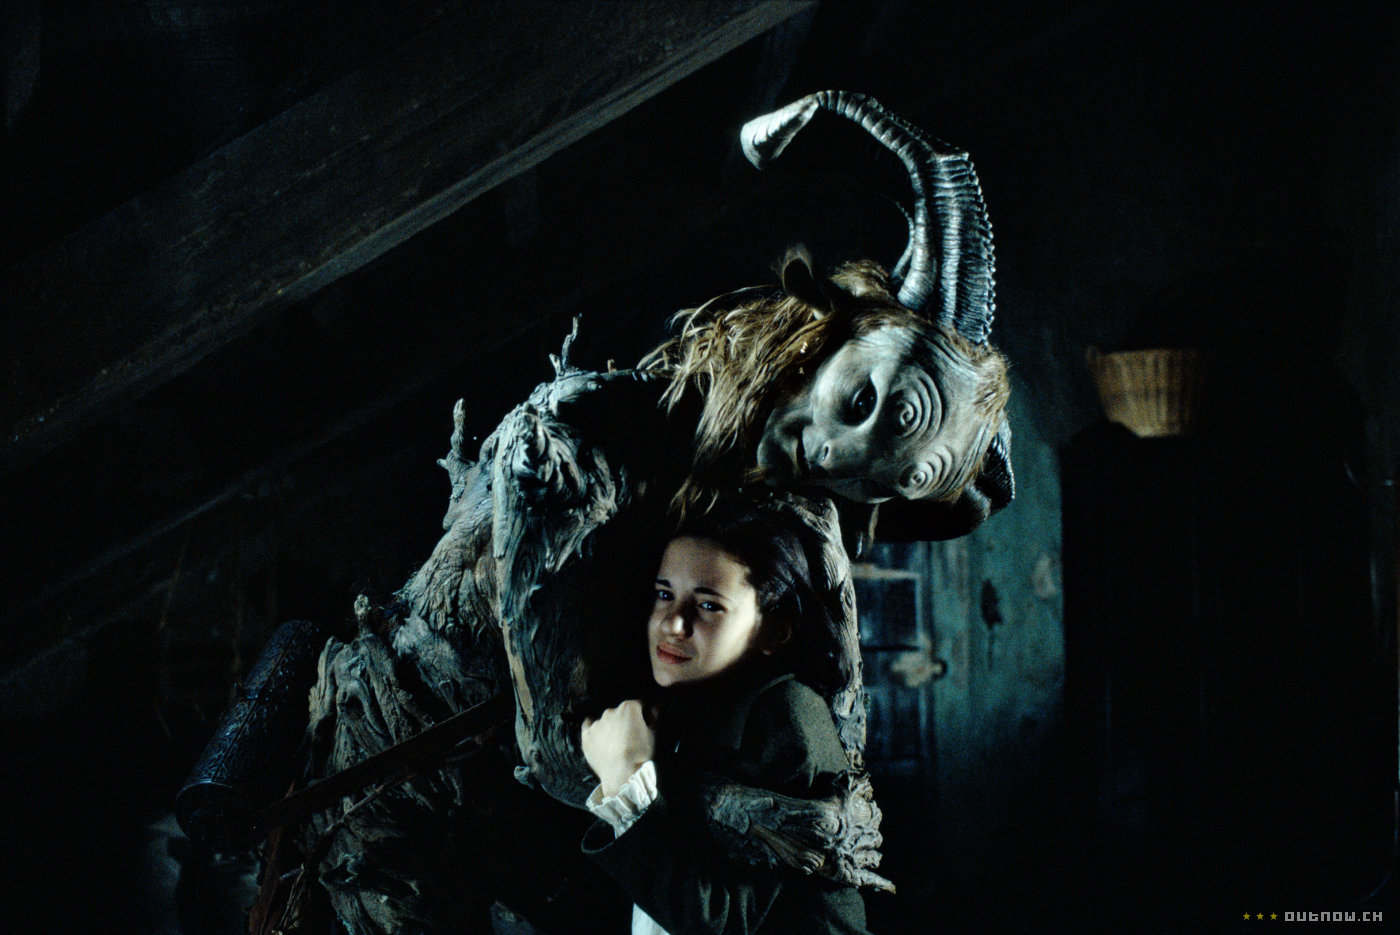 Movie Series: Pan’s Labyrinth (Guillermo del Toro)